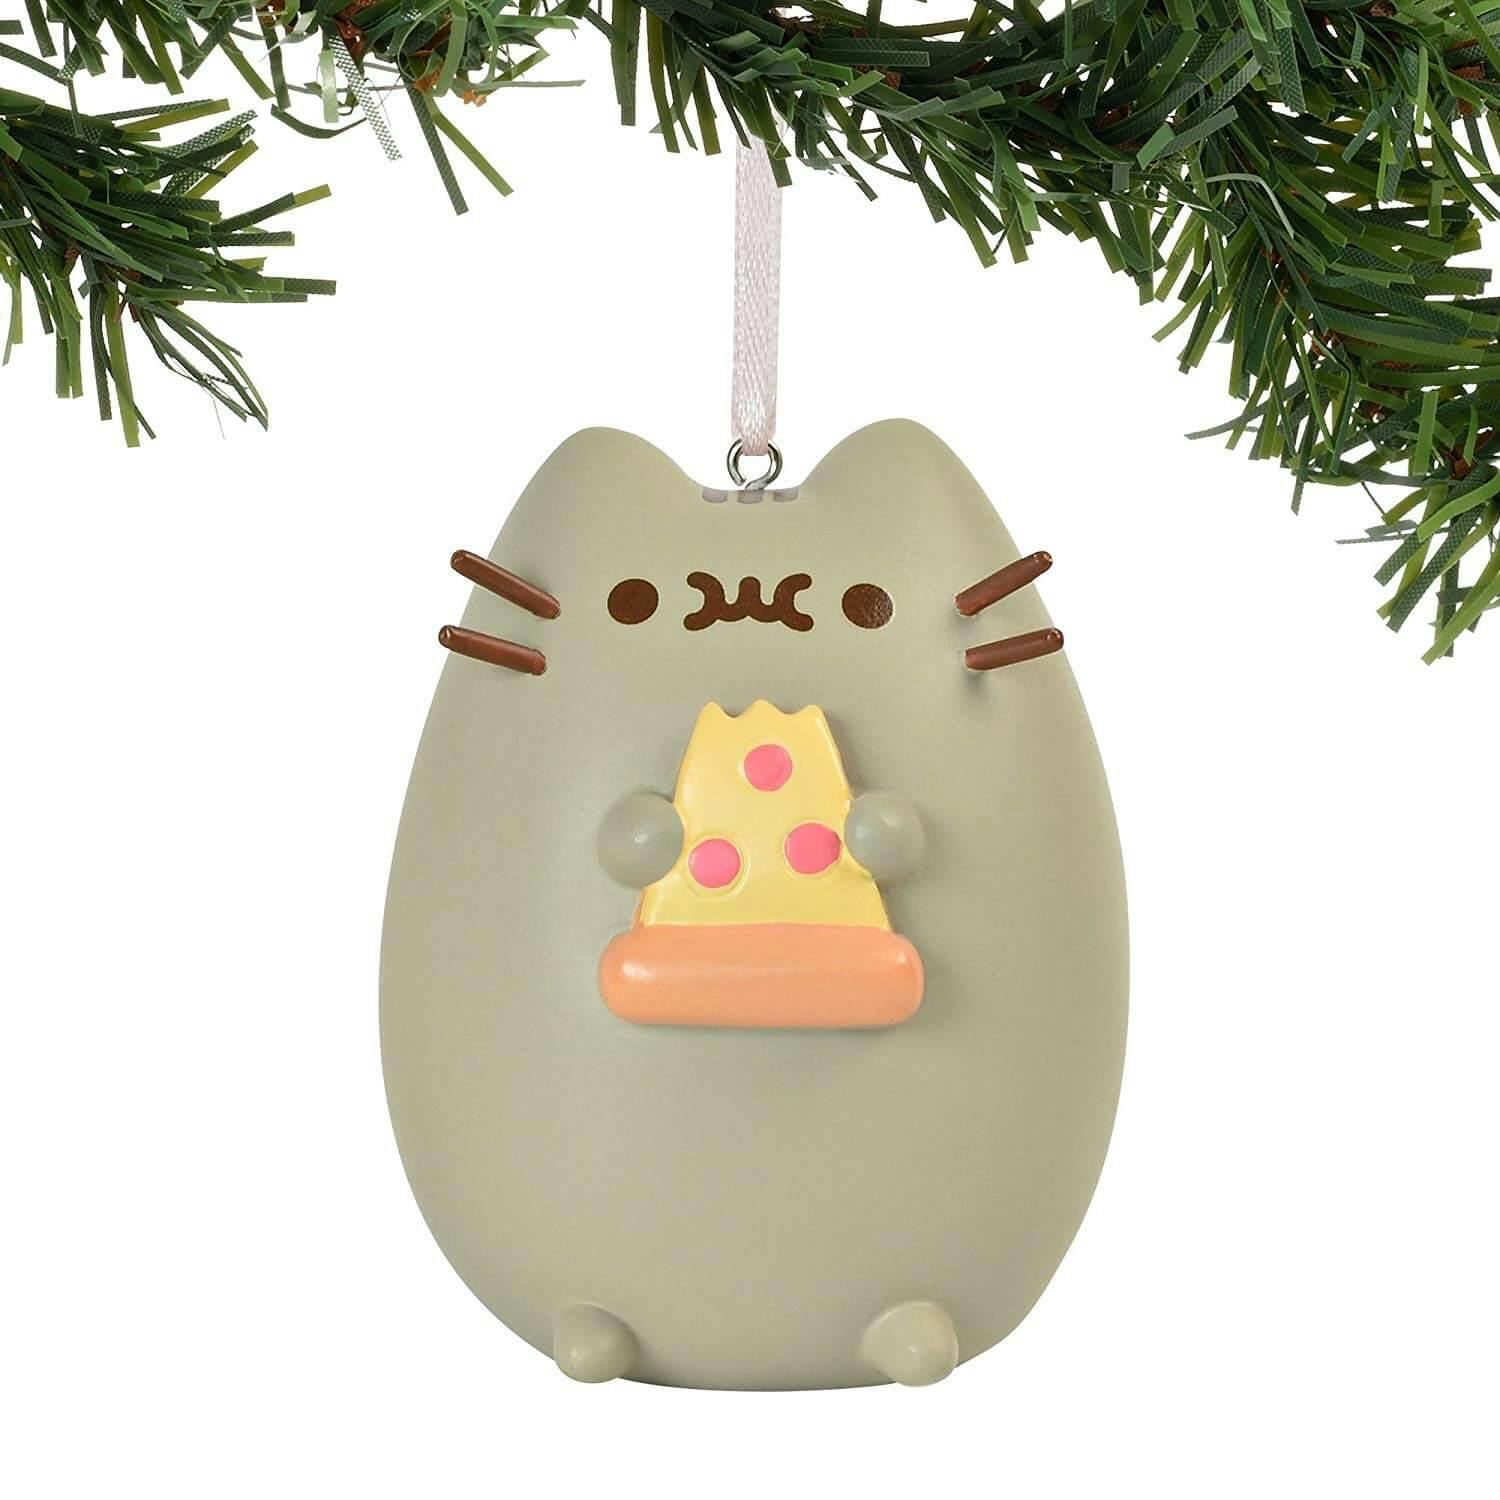 These Pusheen Christmas ornaments make any tree super kawaii